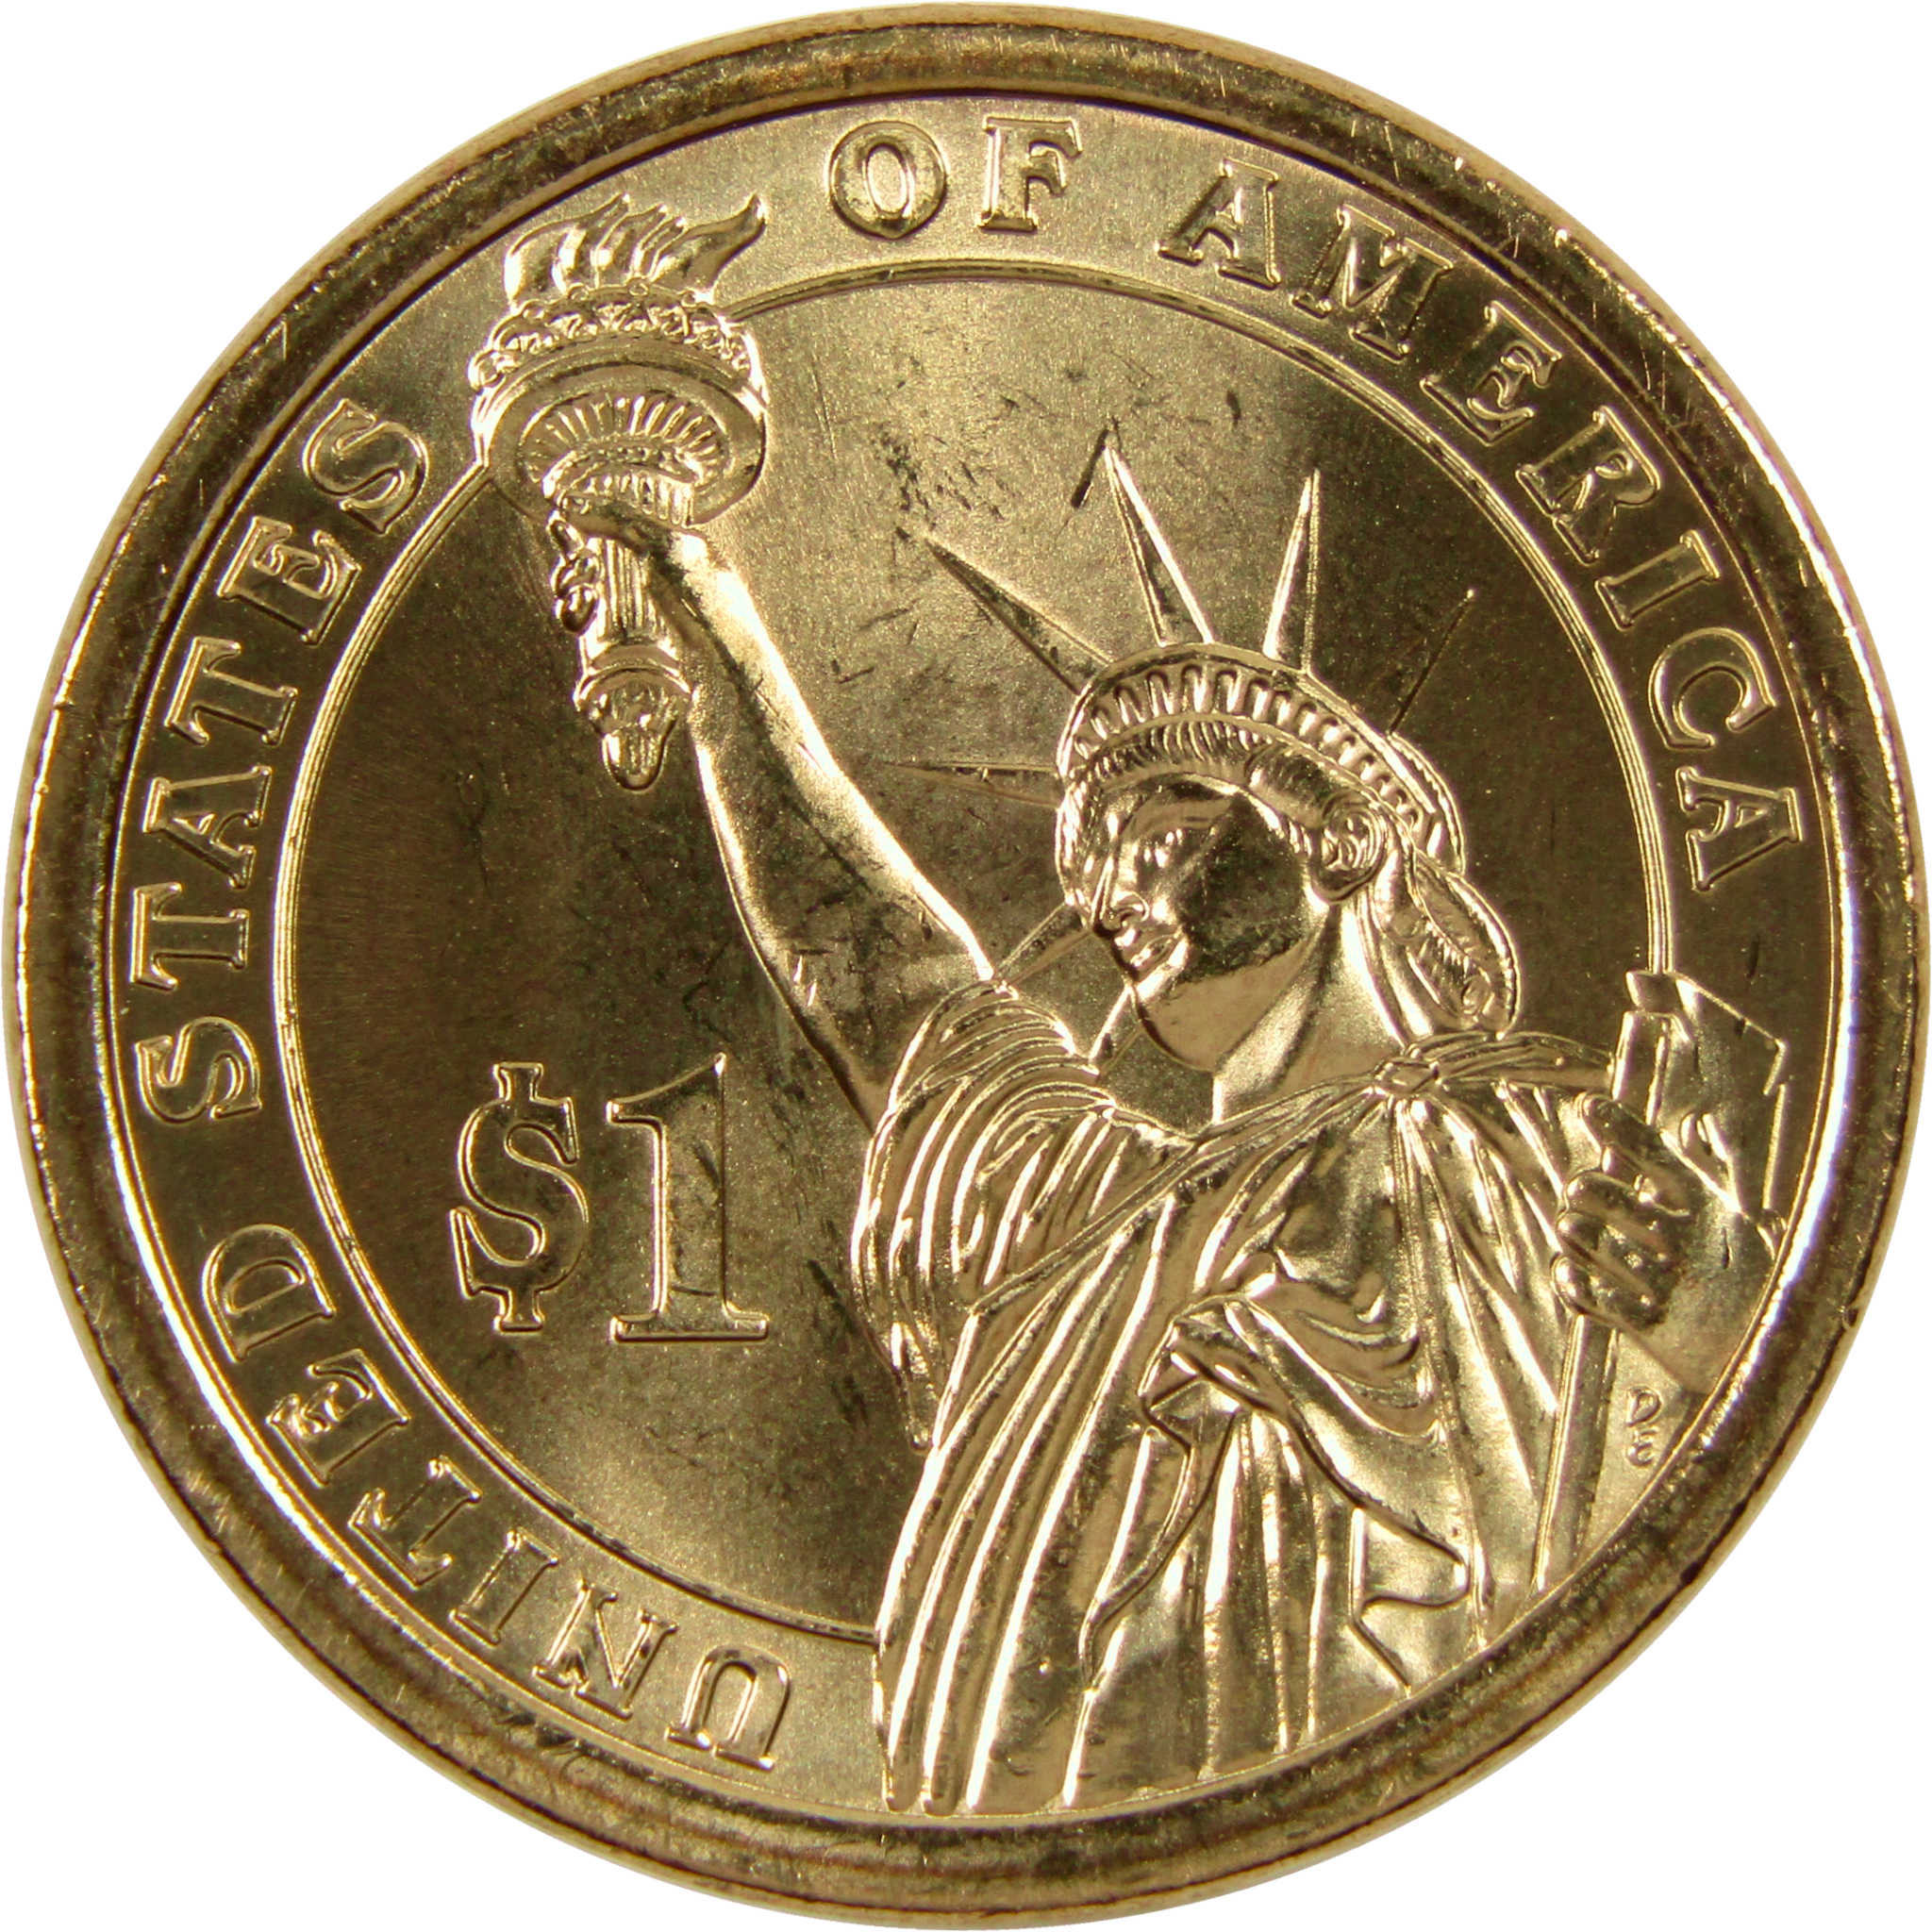 2008 P John Quincy Adams Presidential Dollar BU Uncirculated $1 Coin